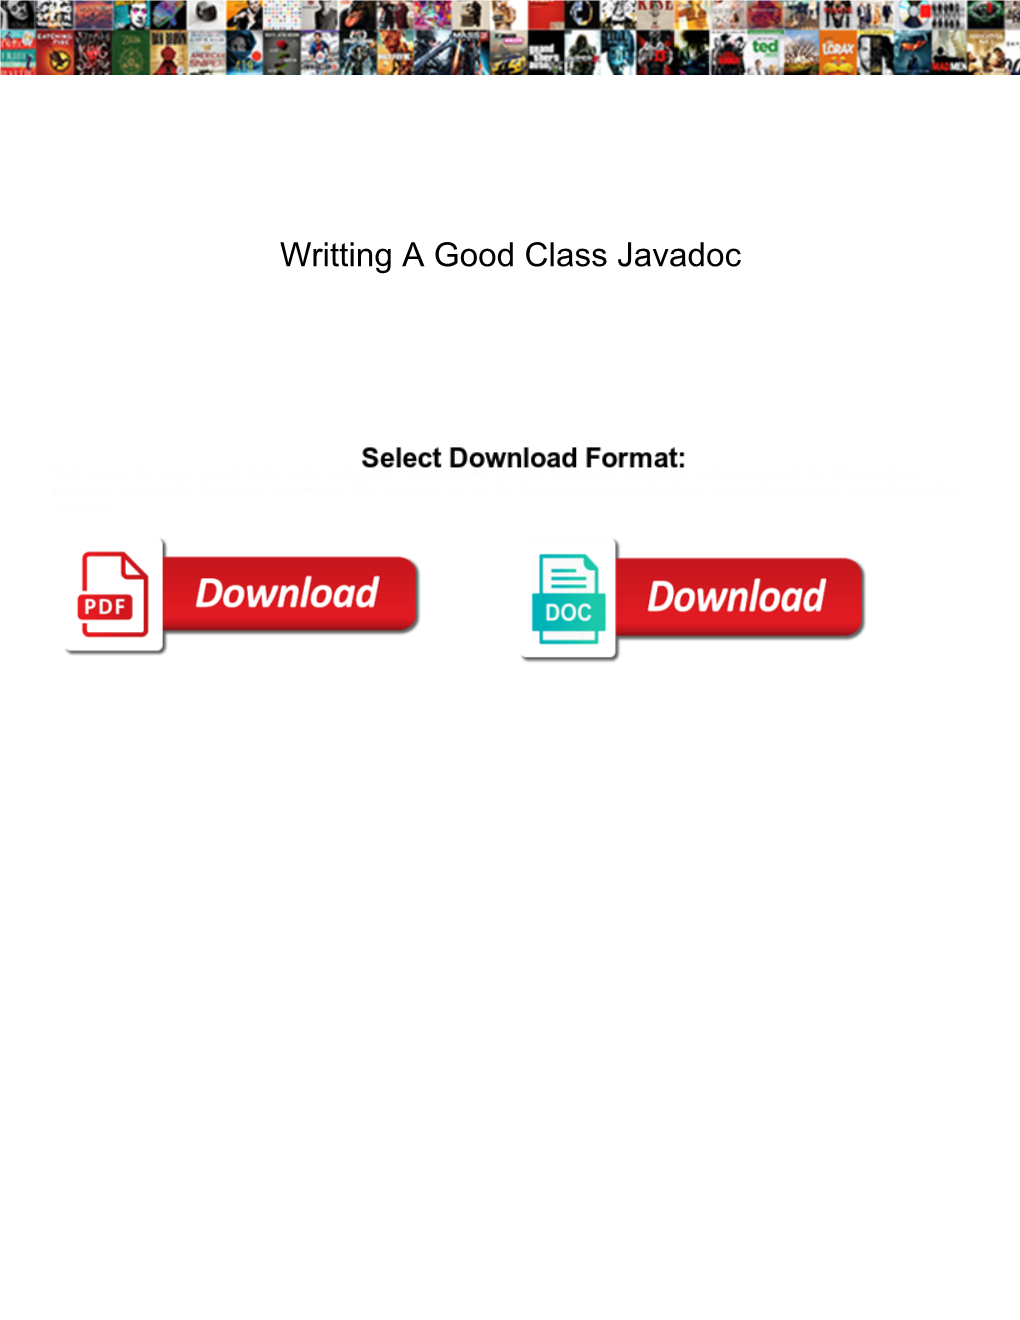 Writting a Good Class Javadoc